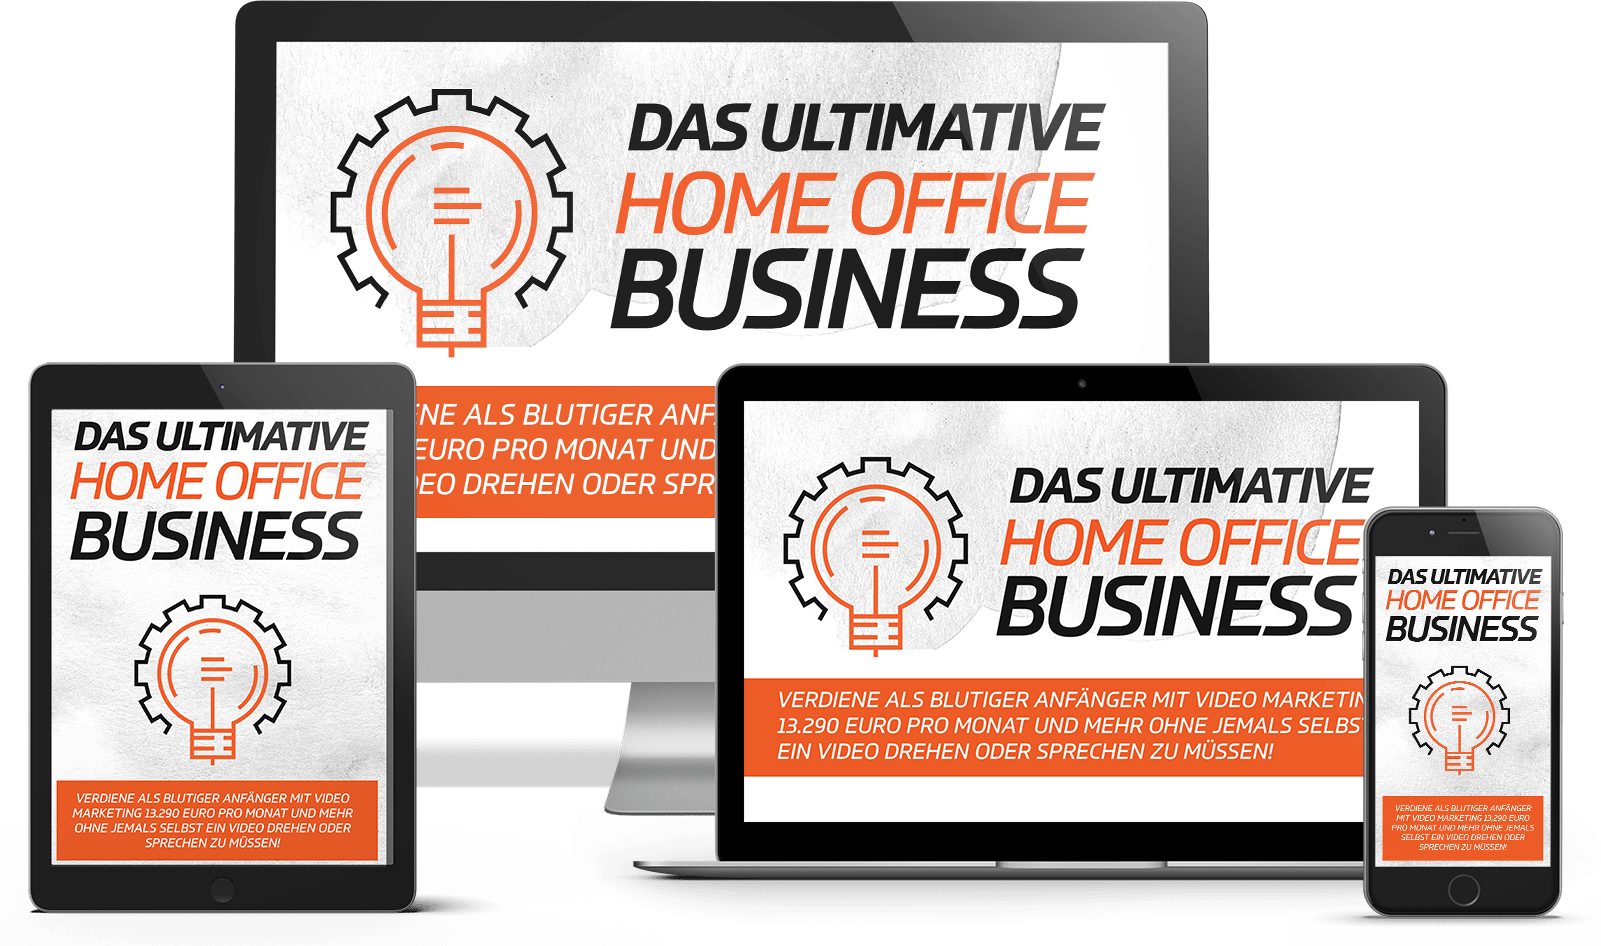 Das Ultimative Home Office Business offizielle Website kaufen